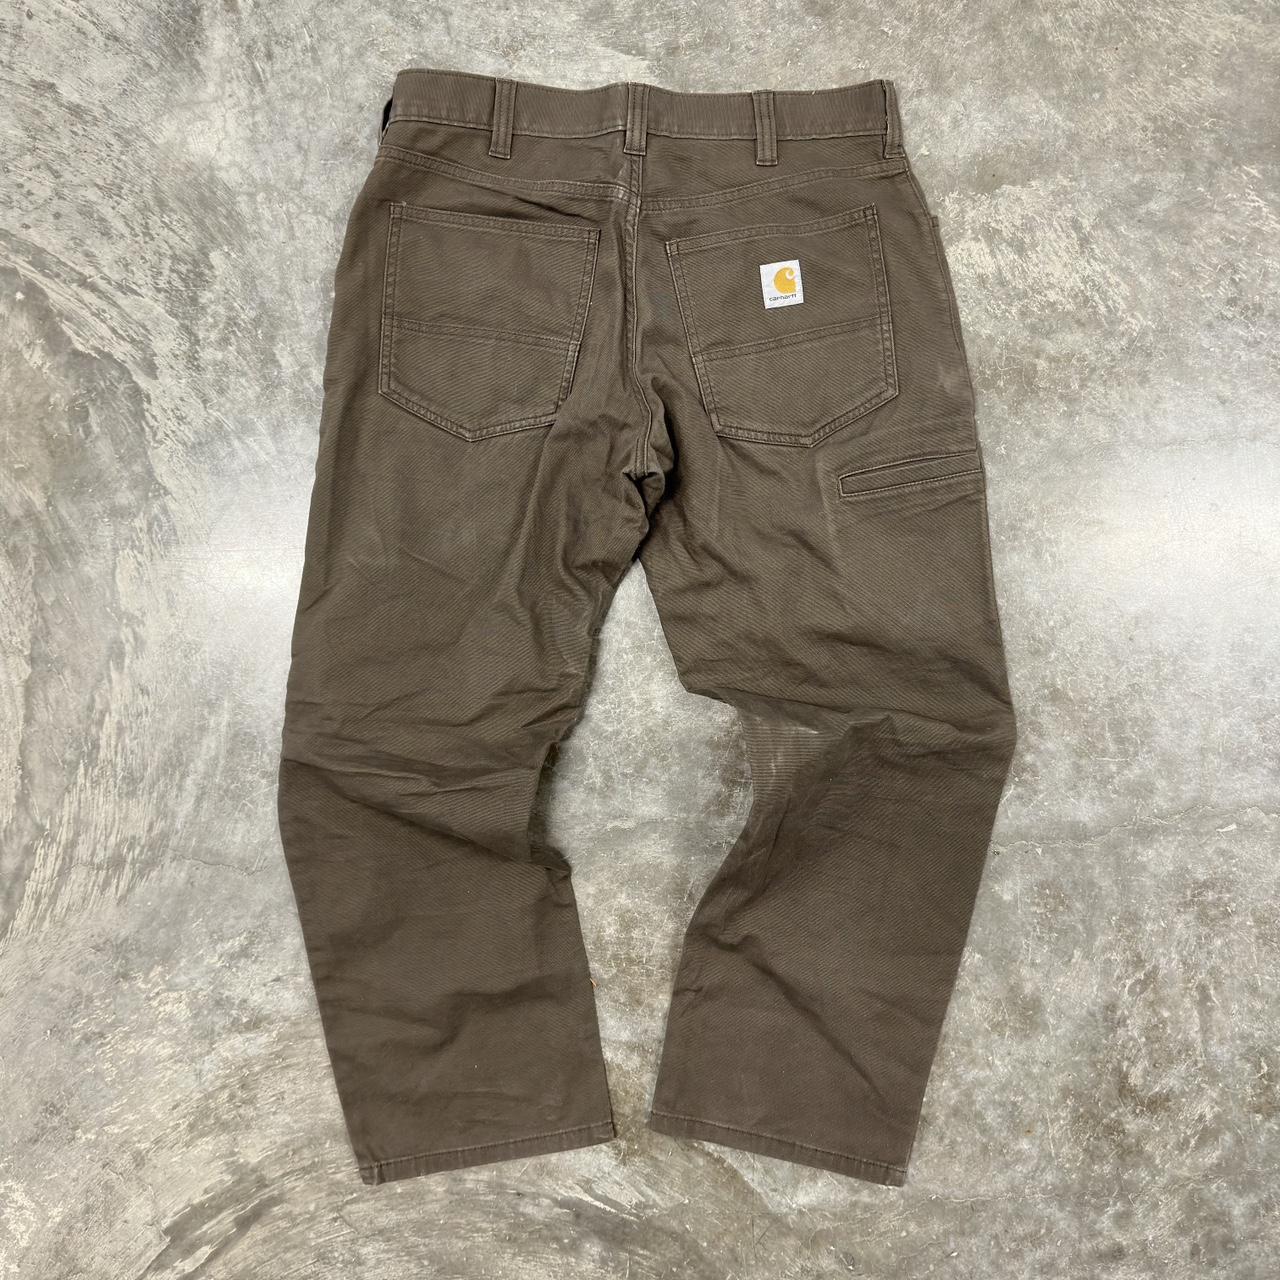 Carhartt brown cargo pants Size 32x28 Has minimal... - Depop